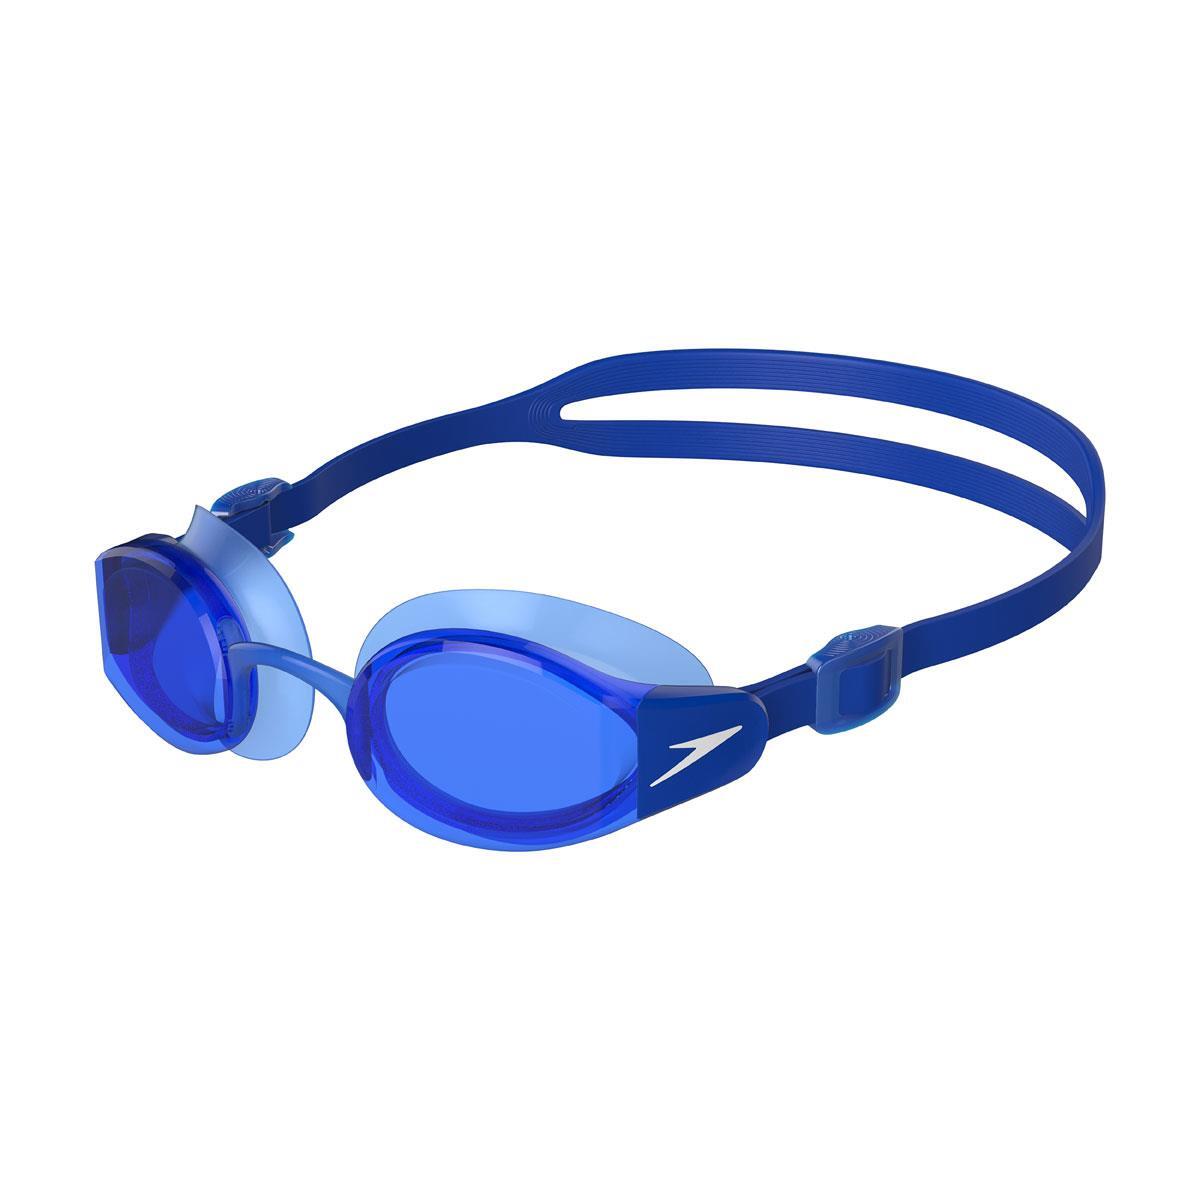 Speedo Mariner Pro Goggles - Beautiful Blue/ Translucent/ White/ Blue 2/5